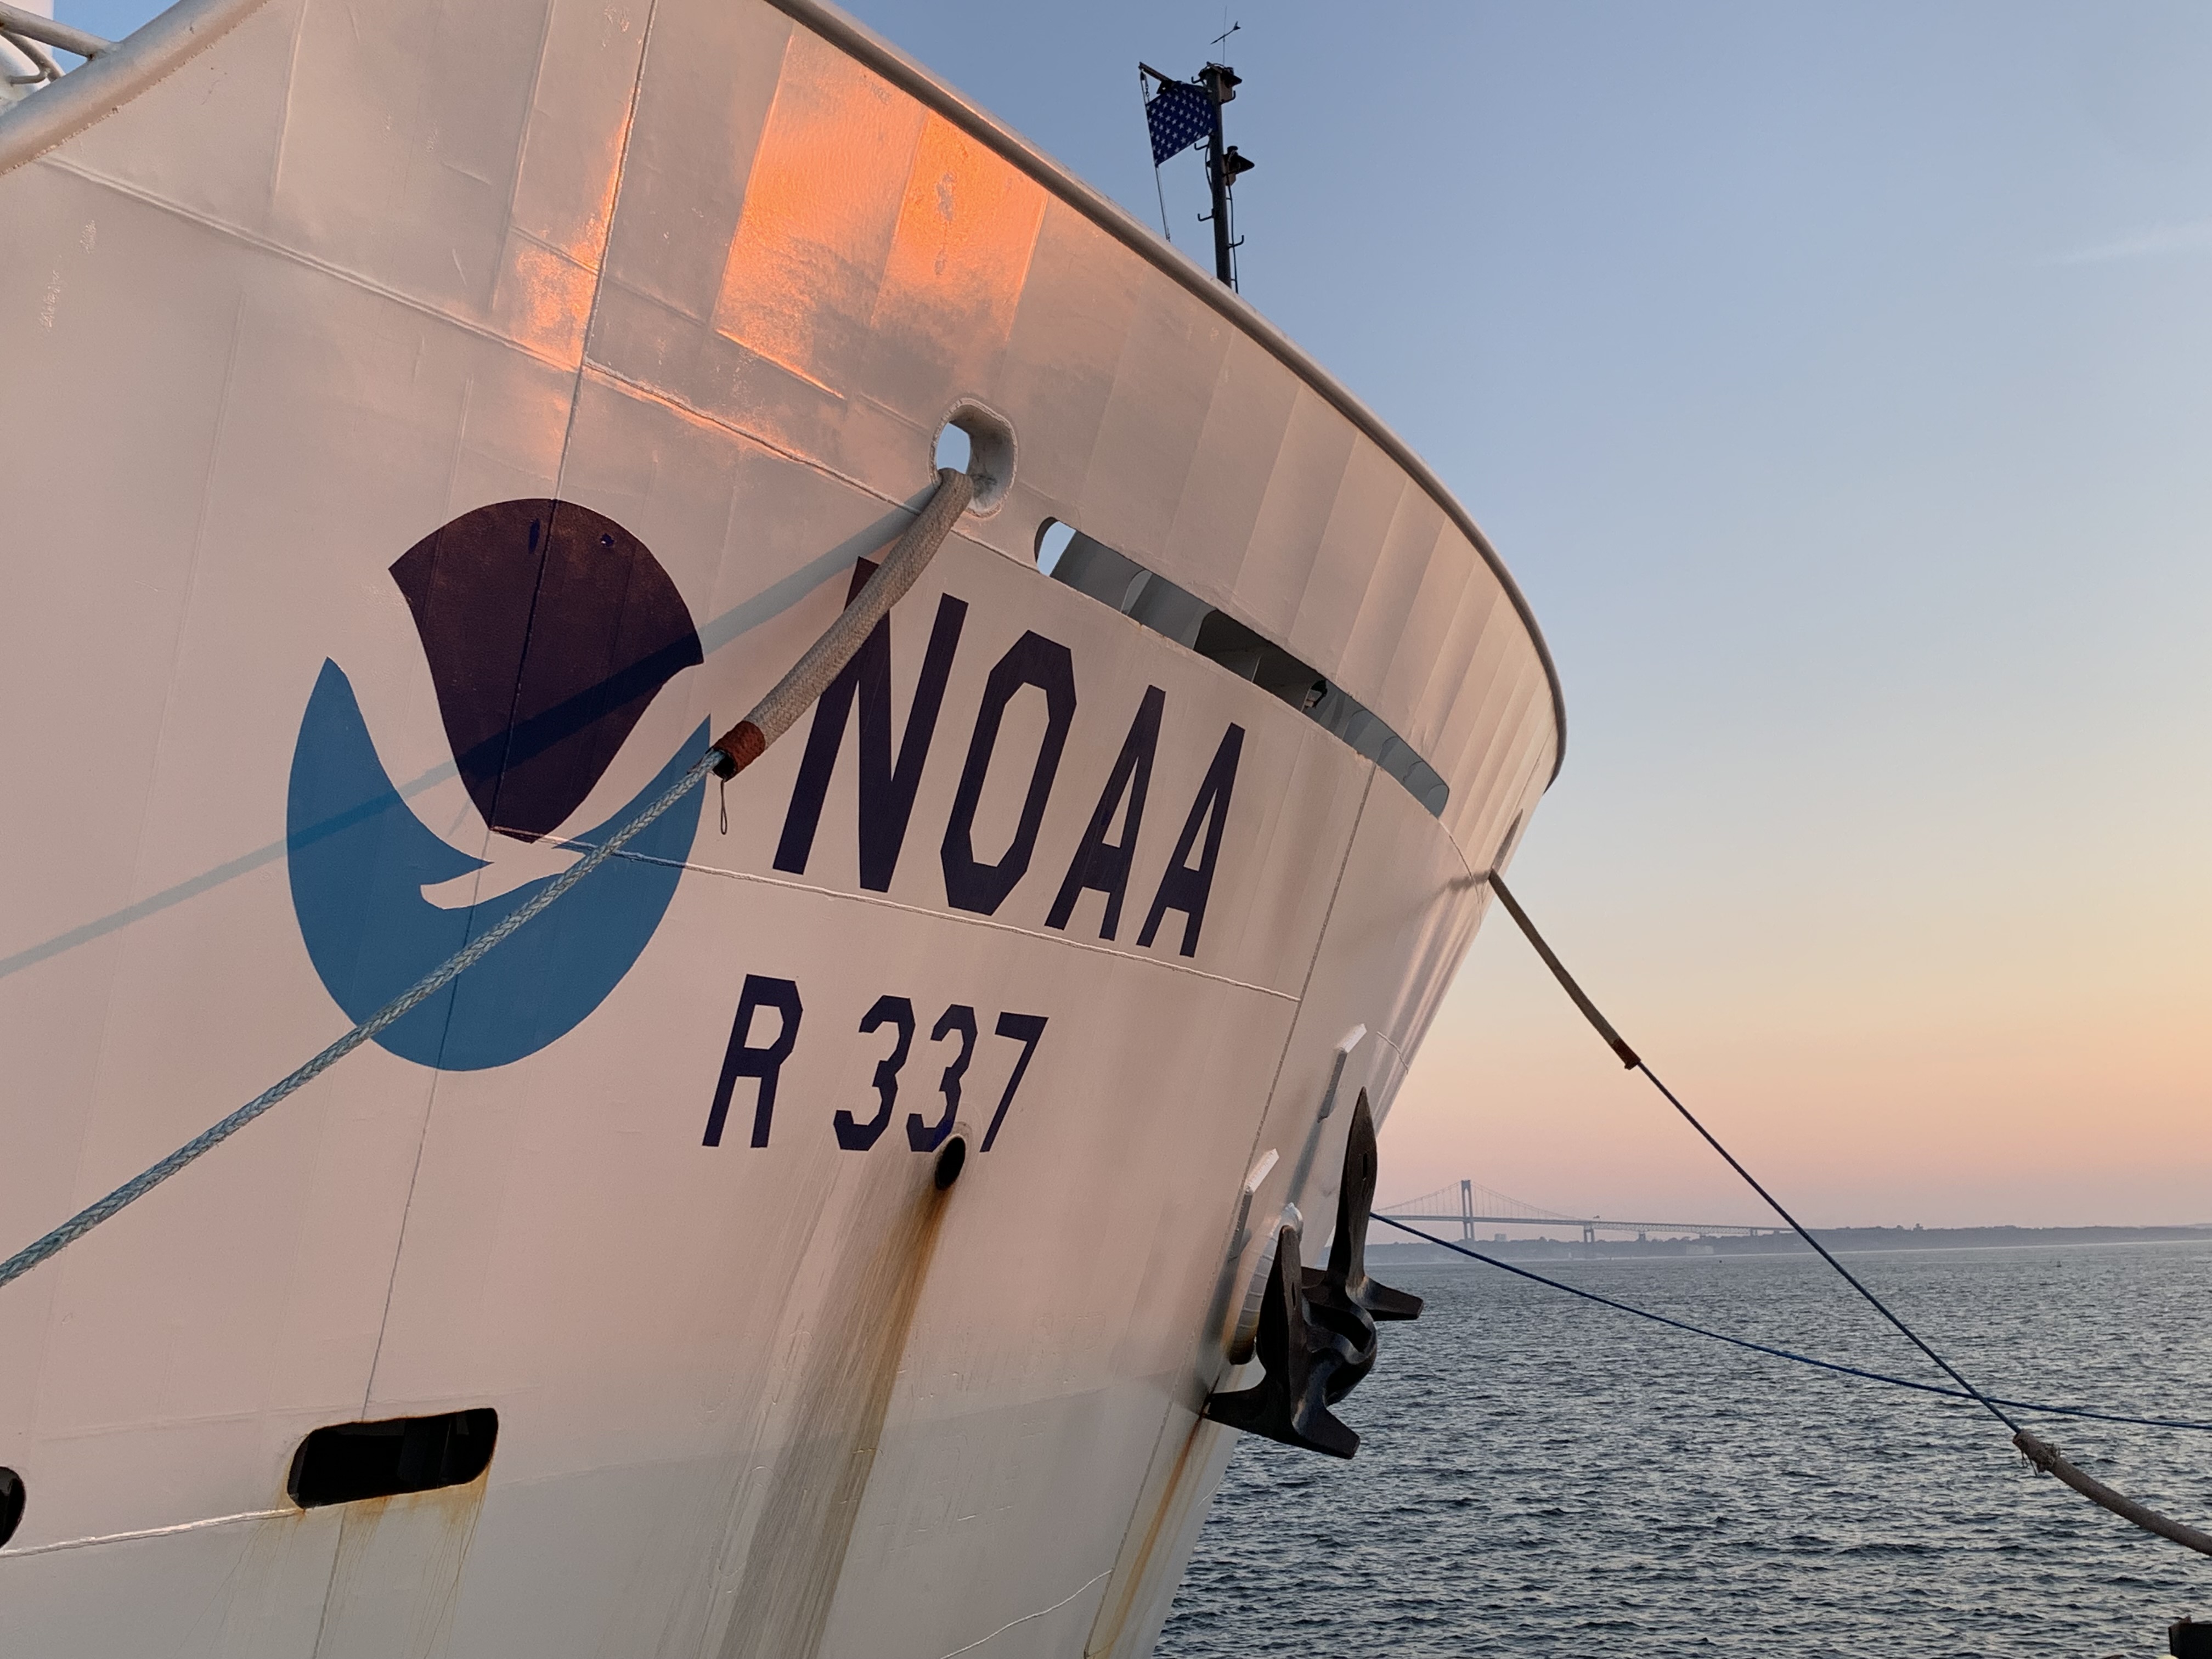 NOAA ship Okeanos Explorer in port.